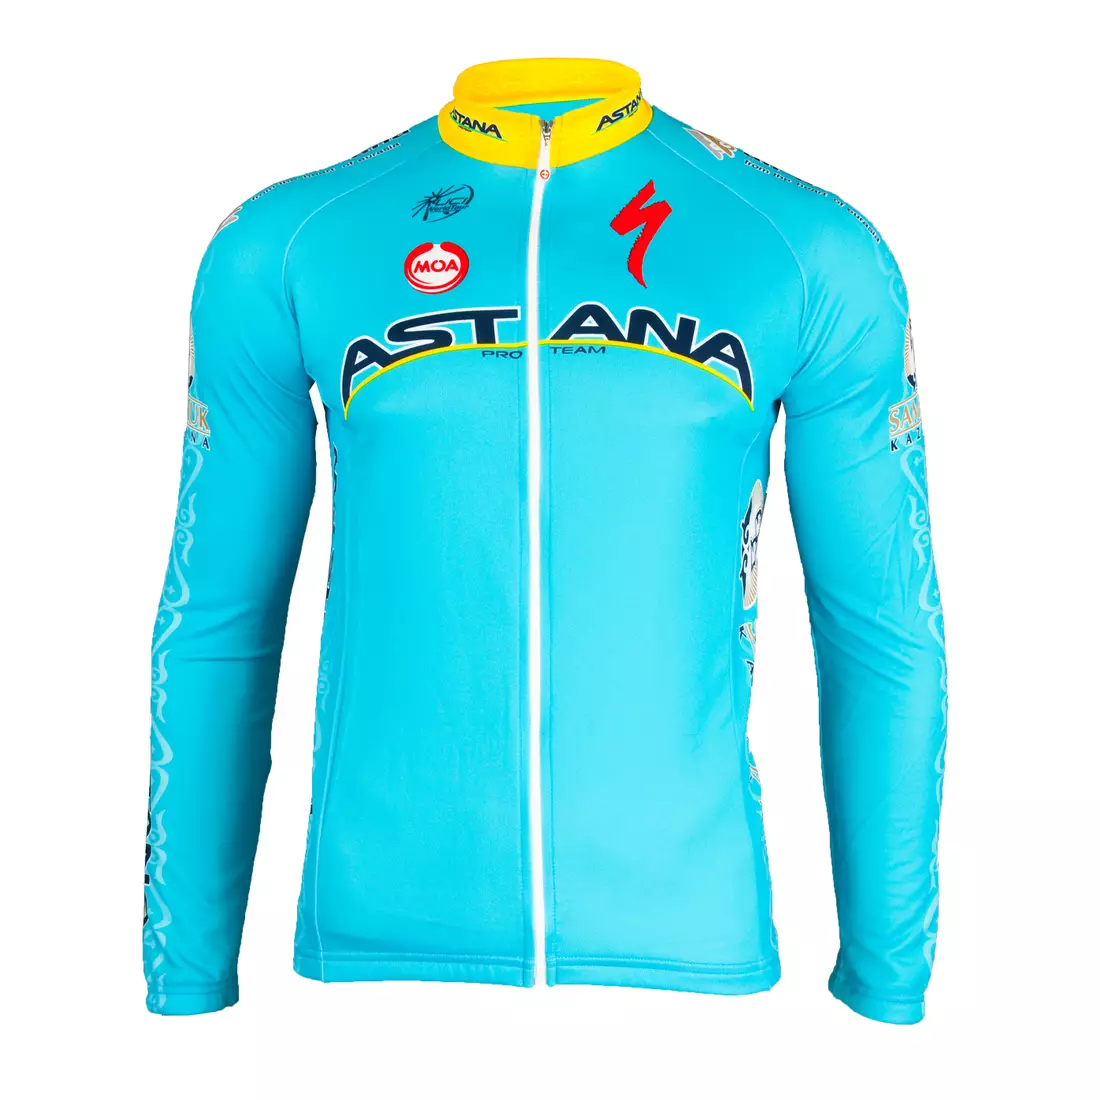 ASTANA 2015 cycling sweatshirt